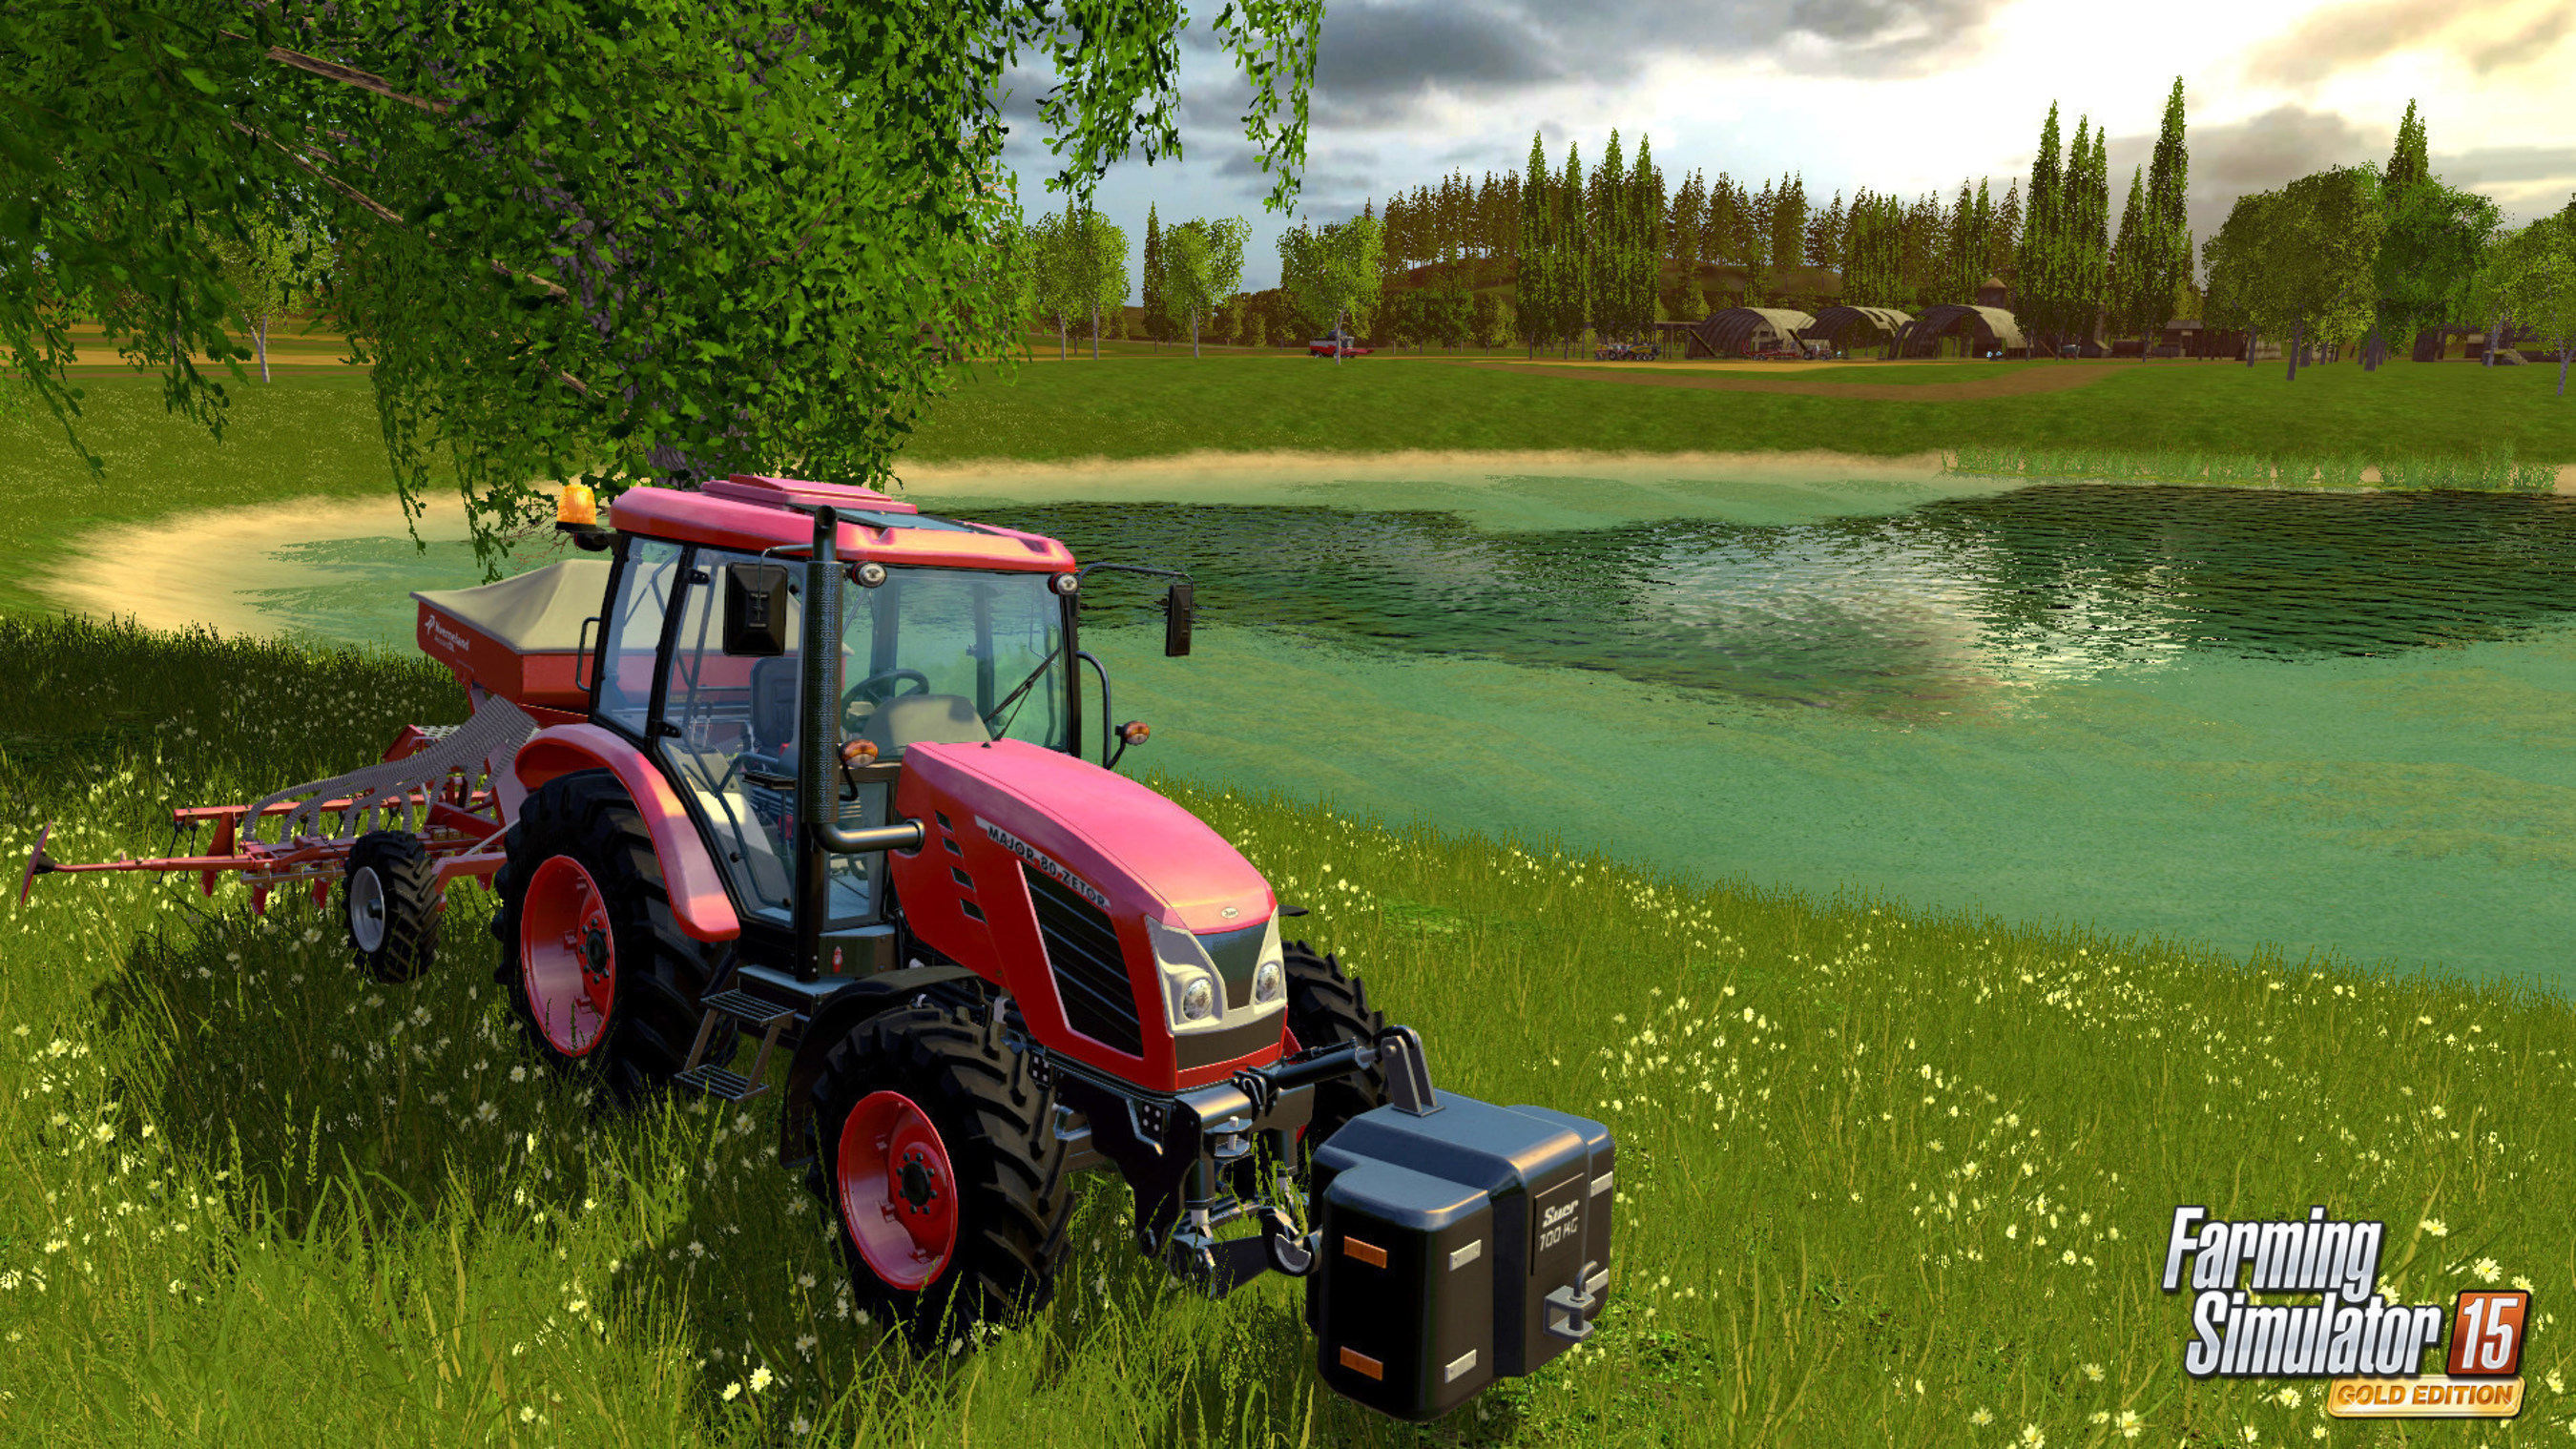 New farming simulator. Фермер симулятор 15 Голд эдишн. Фармирк симулятоор17. Фарминг симулятор 17. Farming Simulator 22.